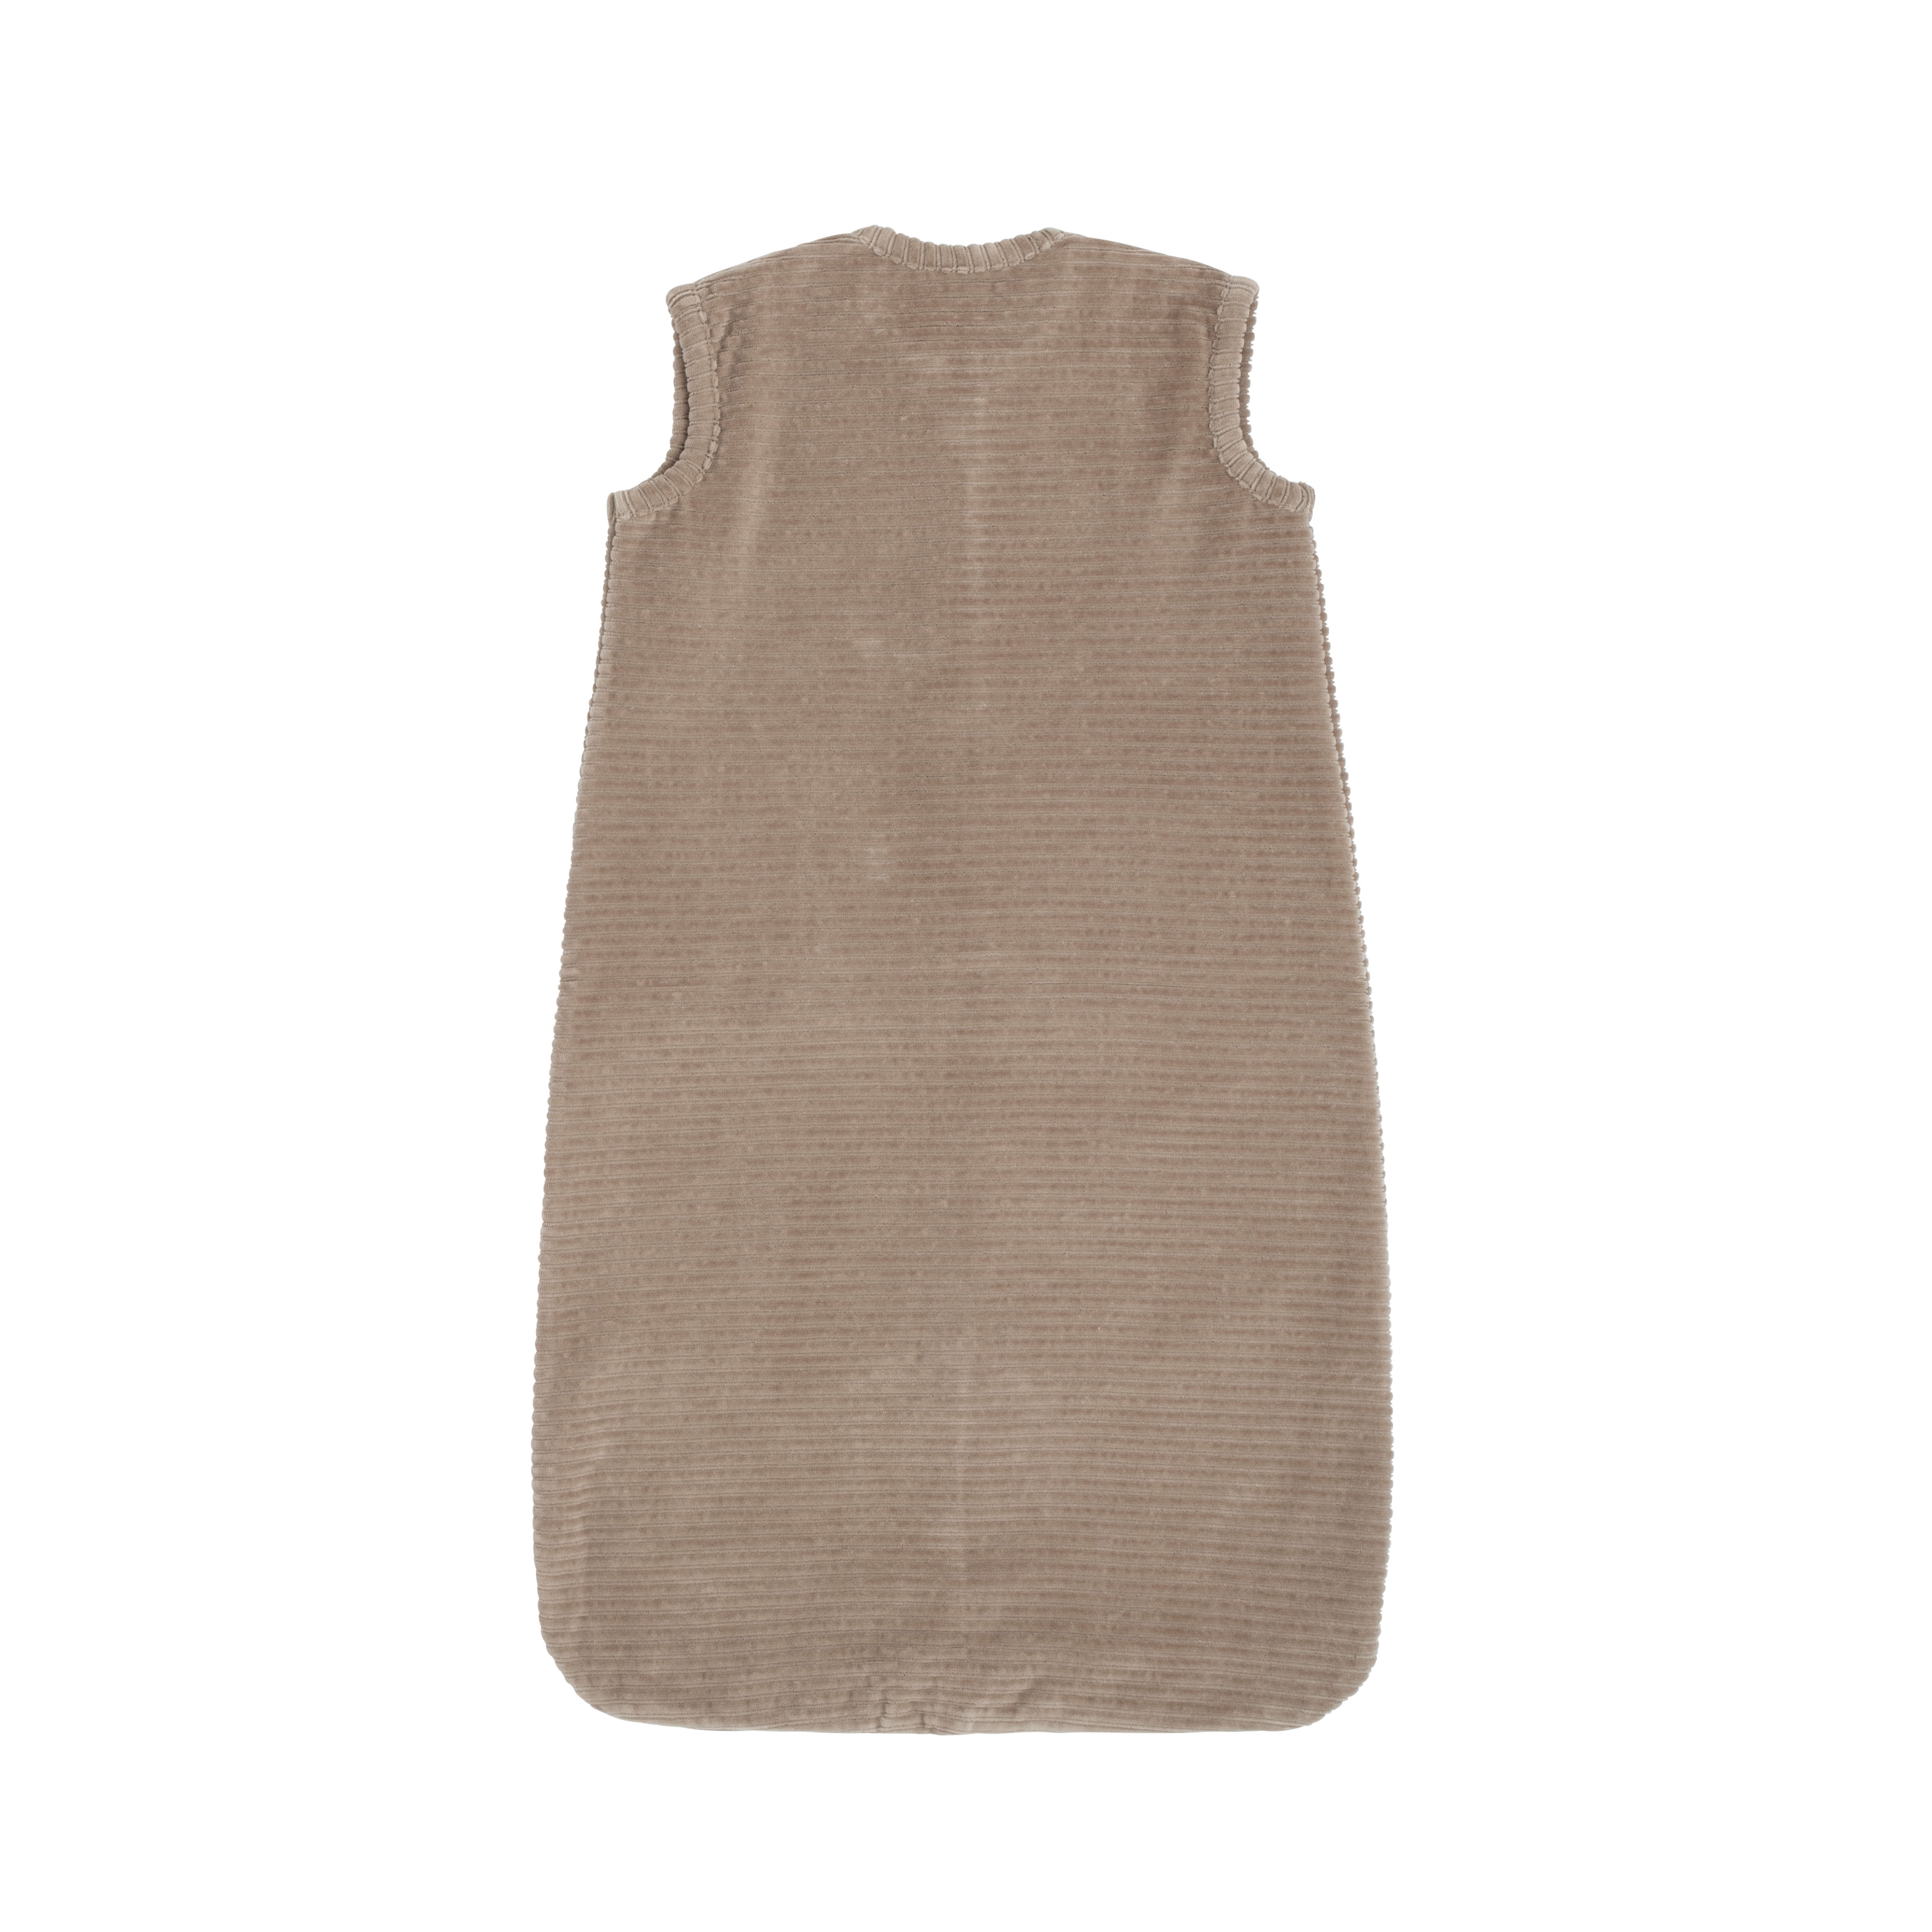 Sleeping bag Sense clay - 90 cm